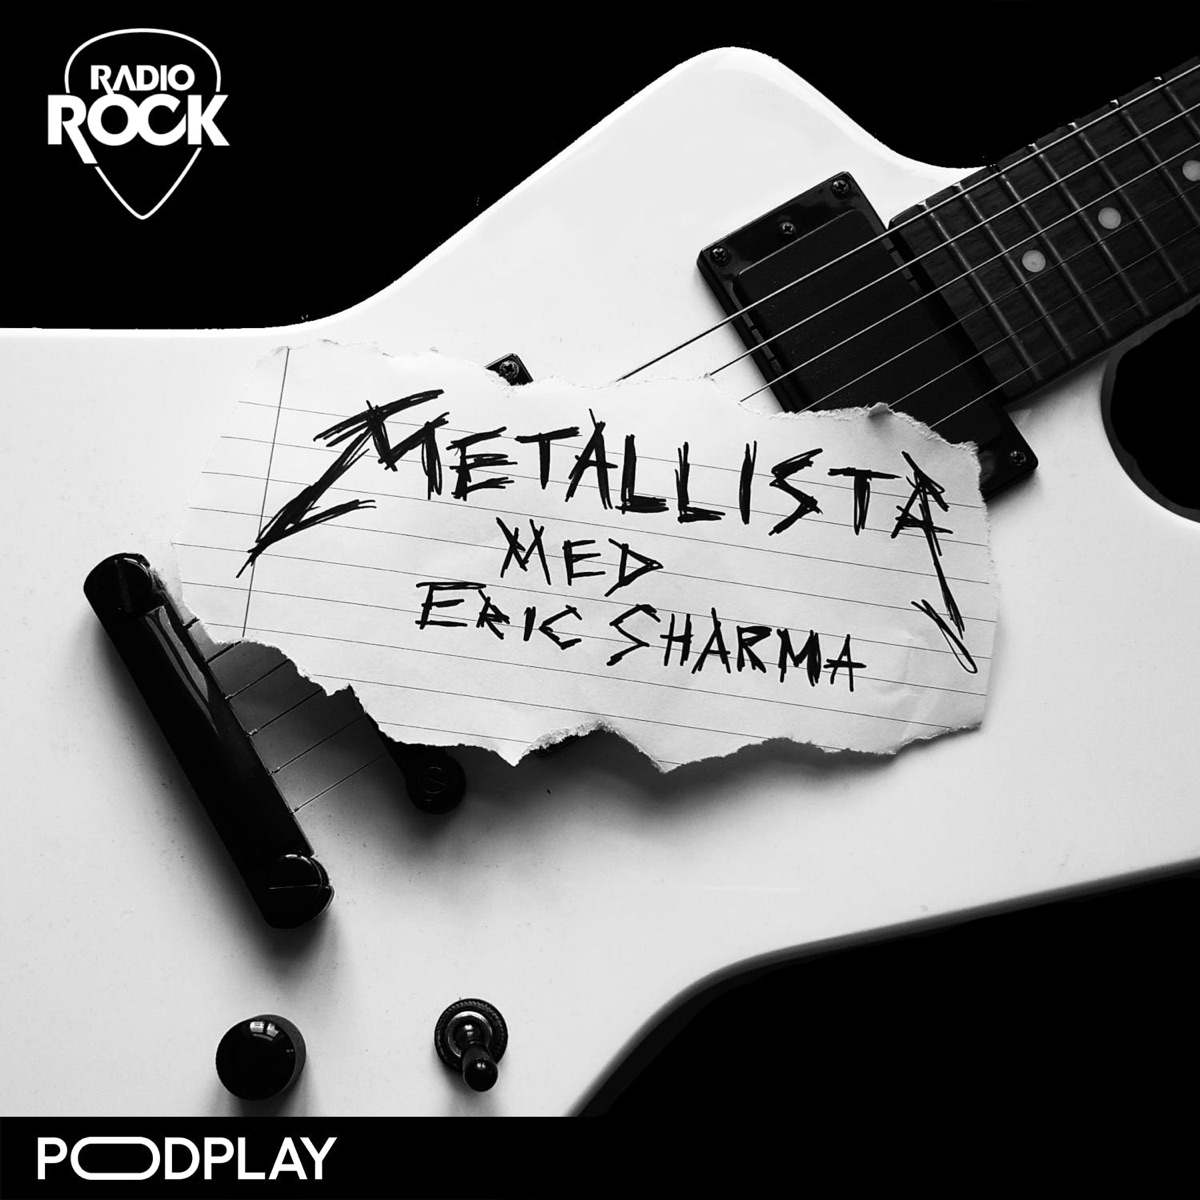 Metallista – Podcast – Podtail